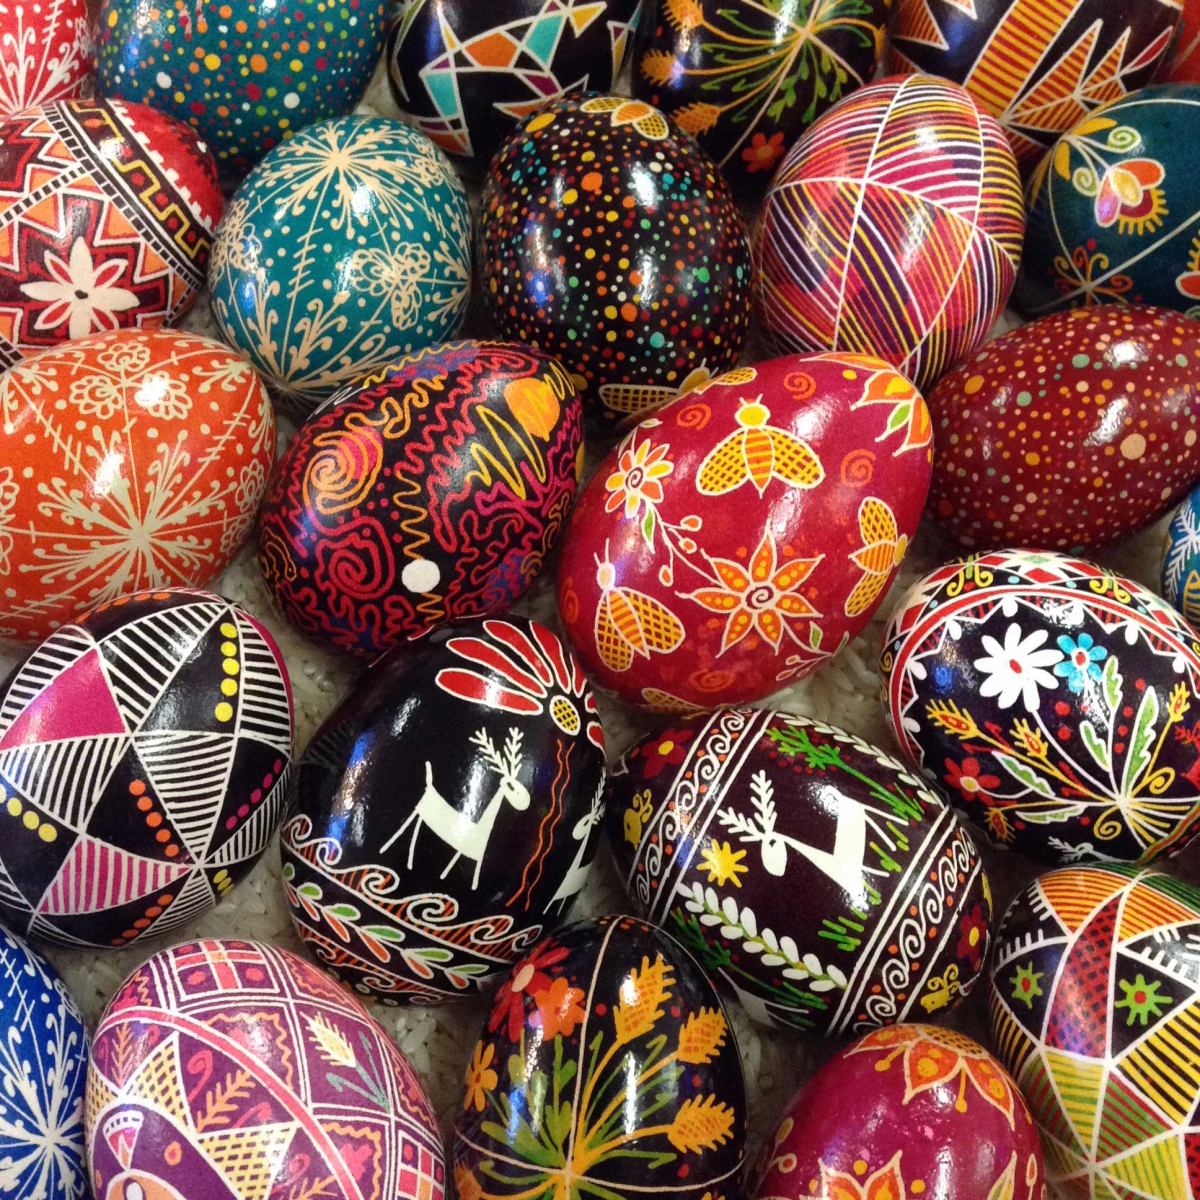 Ukrainian pysanky eggs